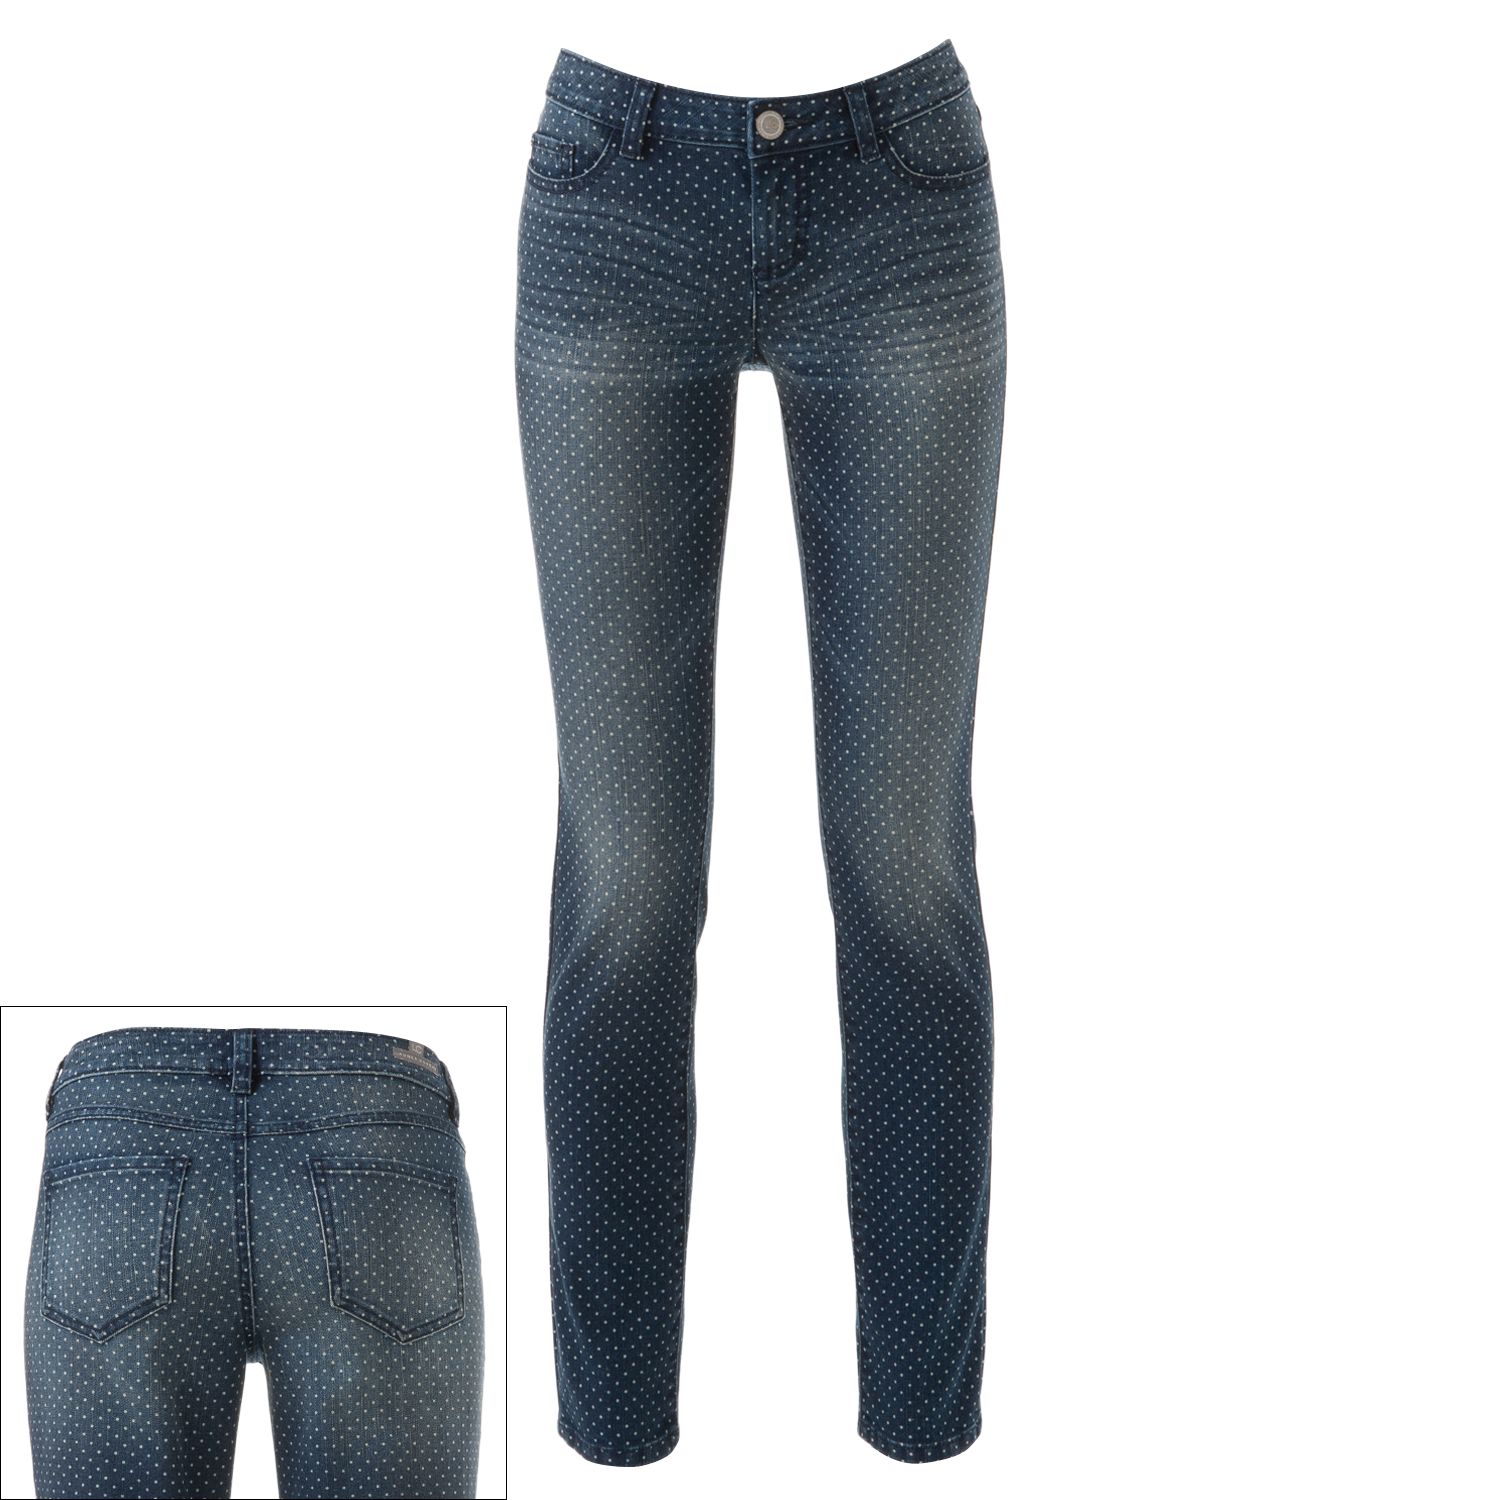 lauren conrad kohls jeans